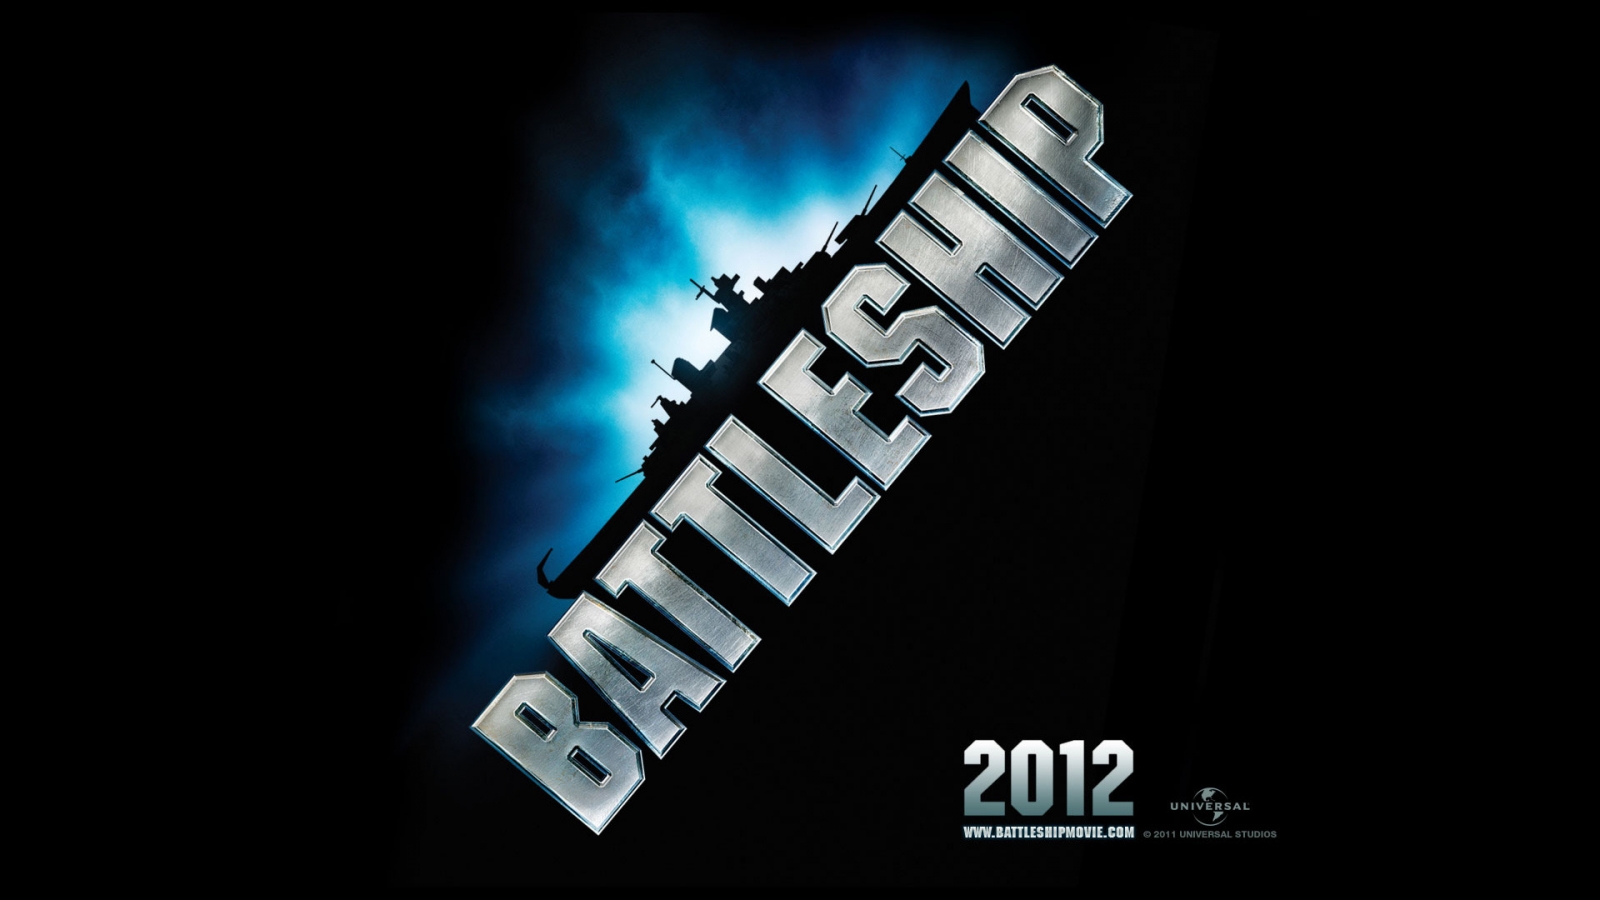 Battleship Movie for 1600 x 900 HDTV resolution